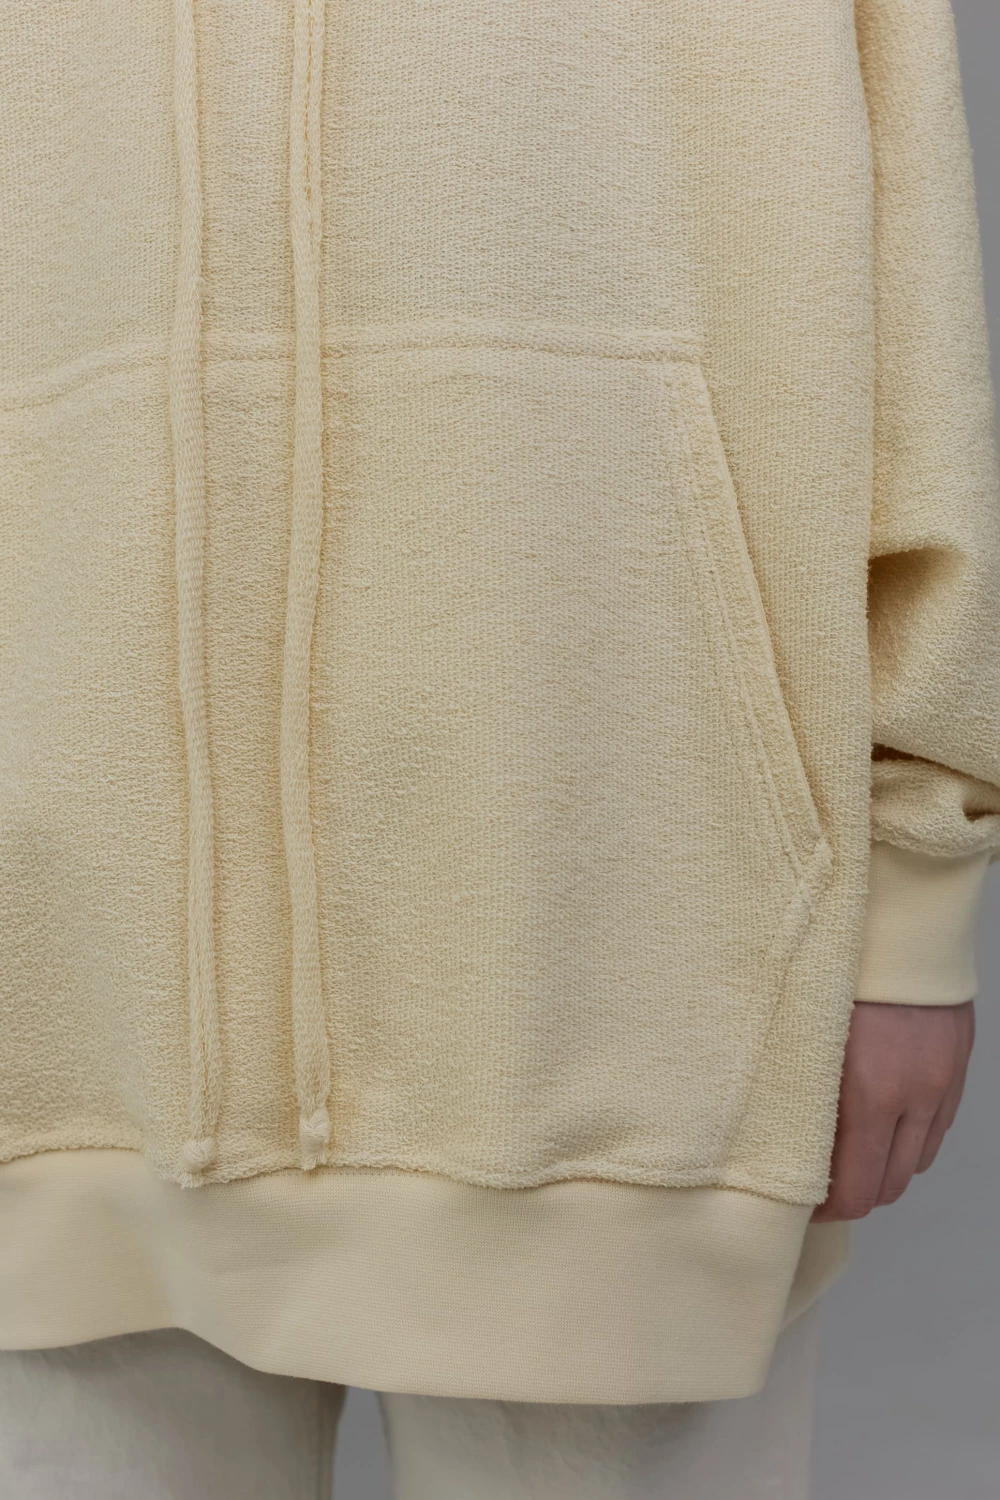 hoodie "unbrushed" in vanilla color